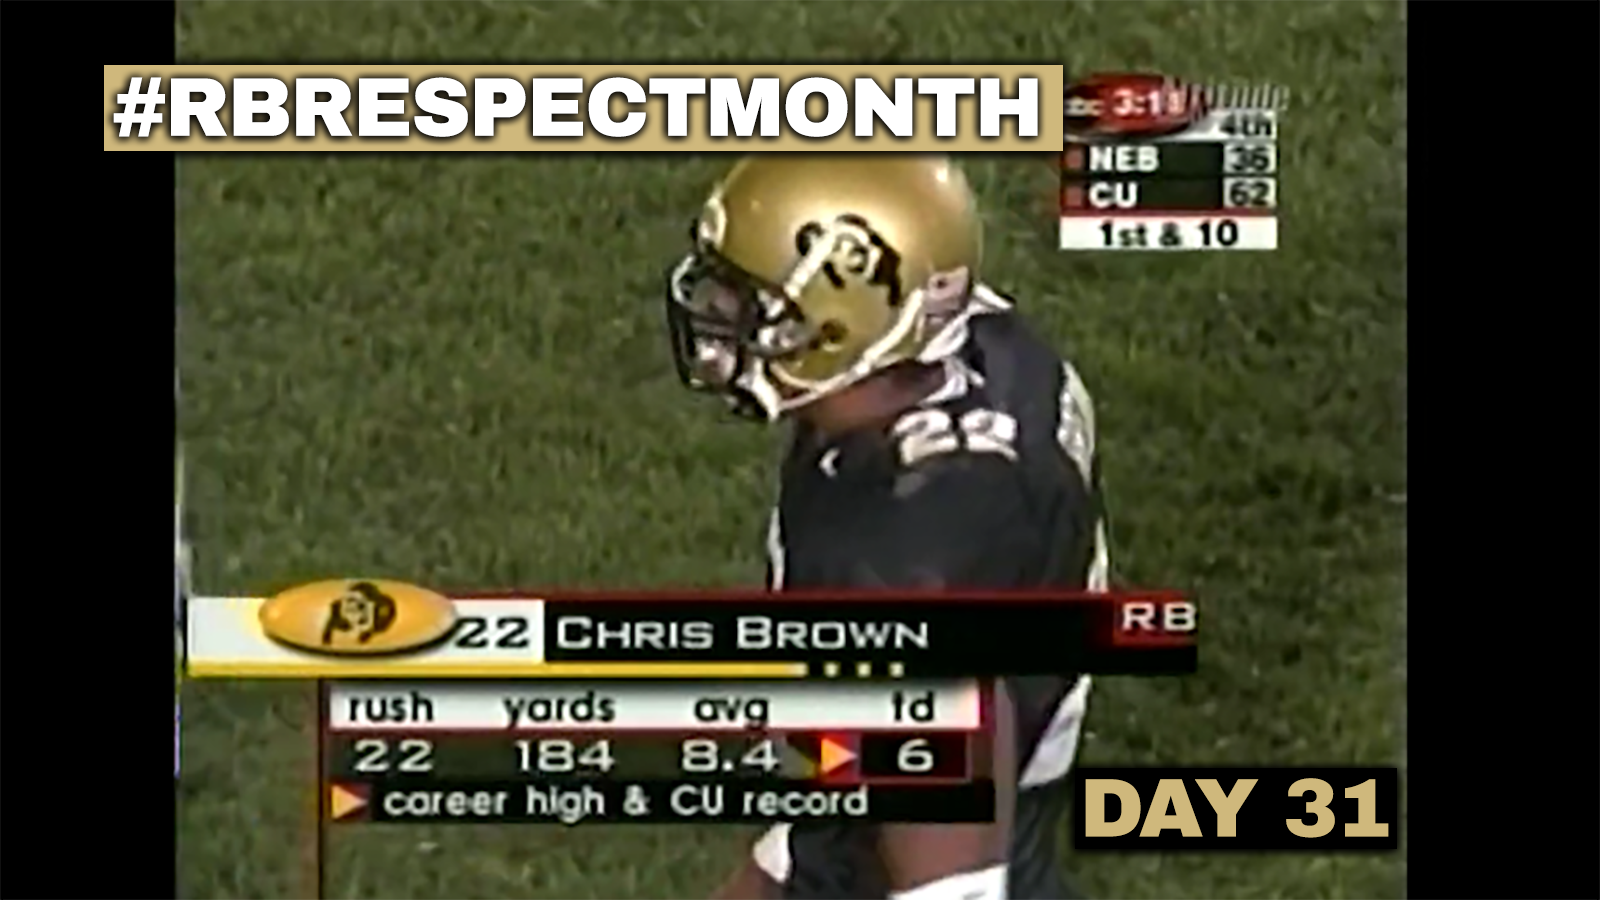 RB Respect Month, Day 31: Chris Brown and Bobby Purify vs. Nebraska (2001)